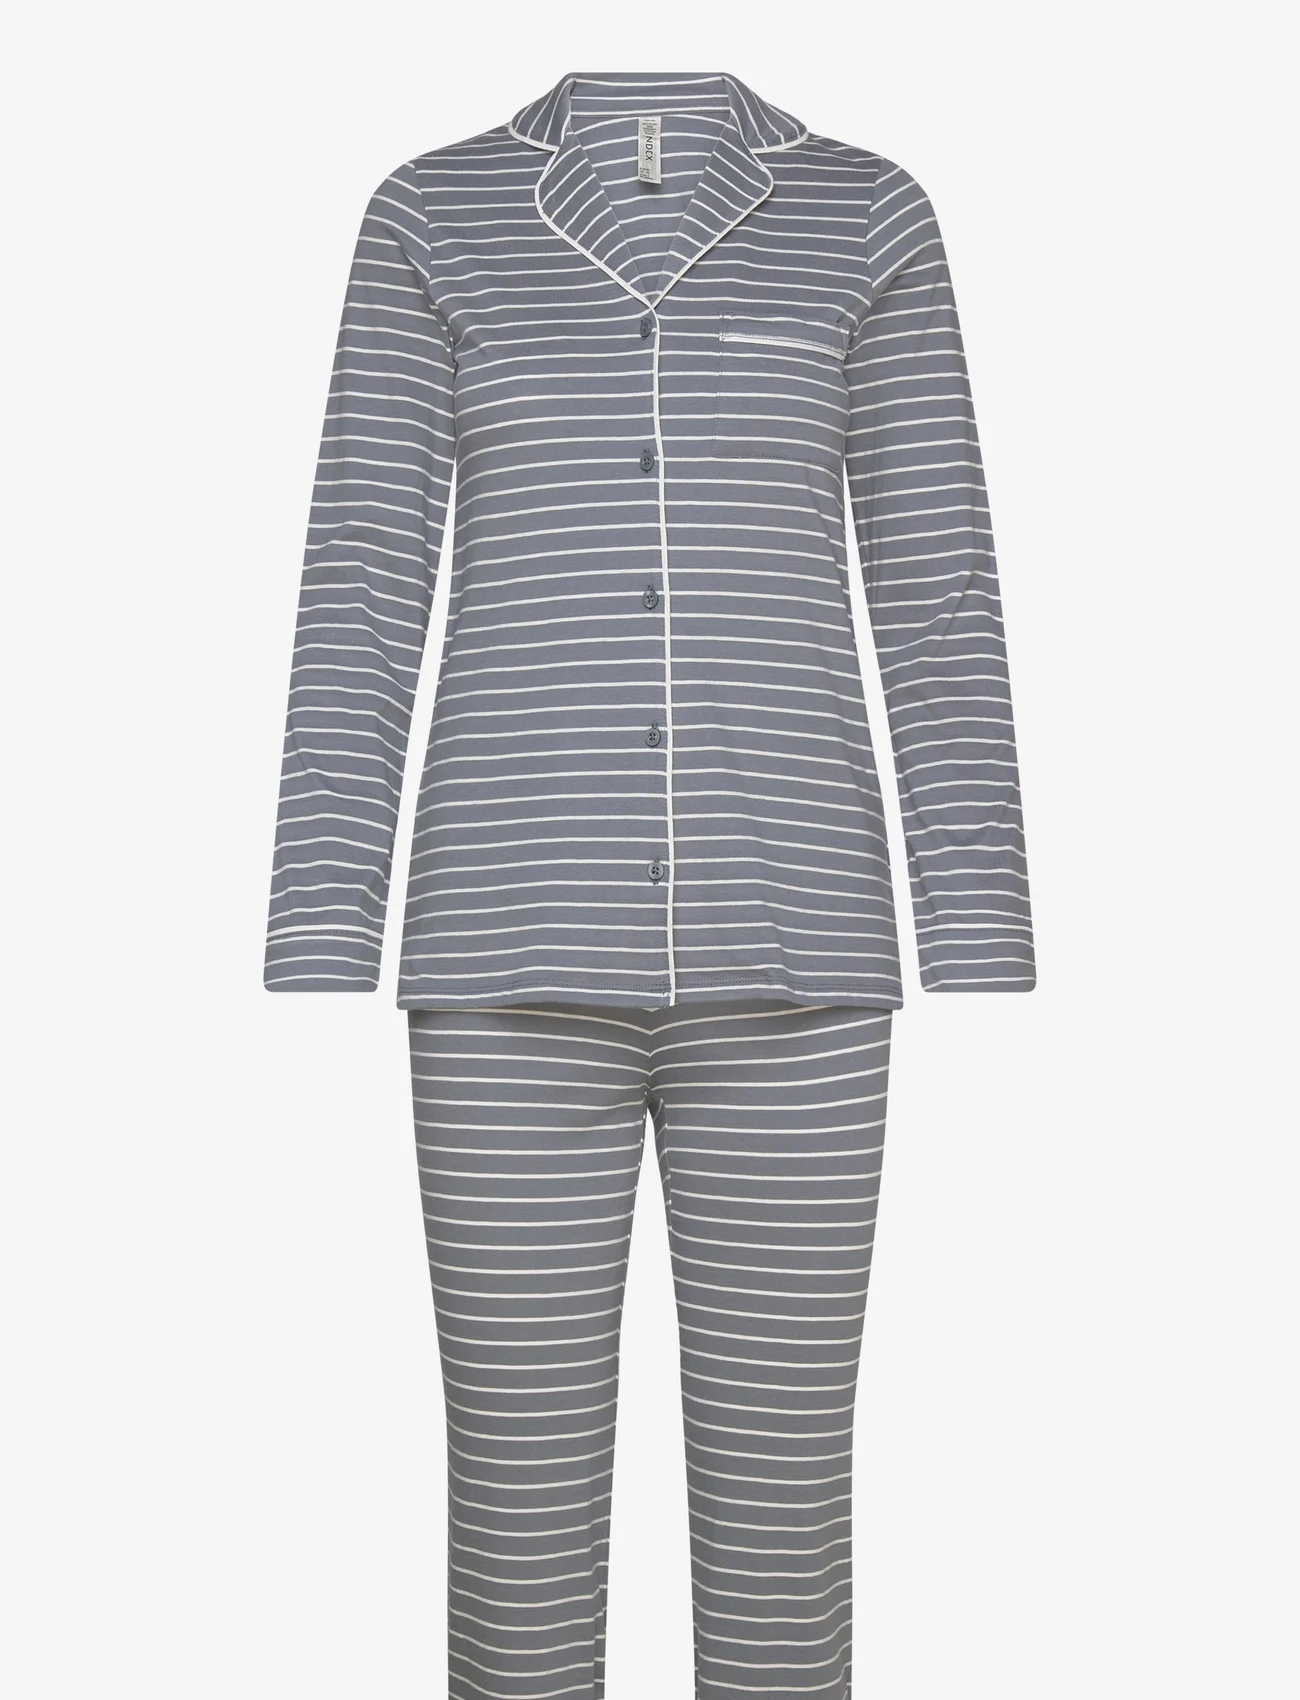 Lindex - Pyjama jersey piping stripe an - pyjamas - dusty blue - 1